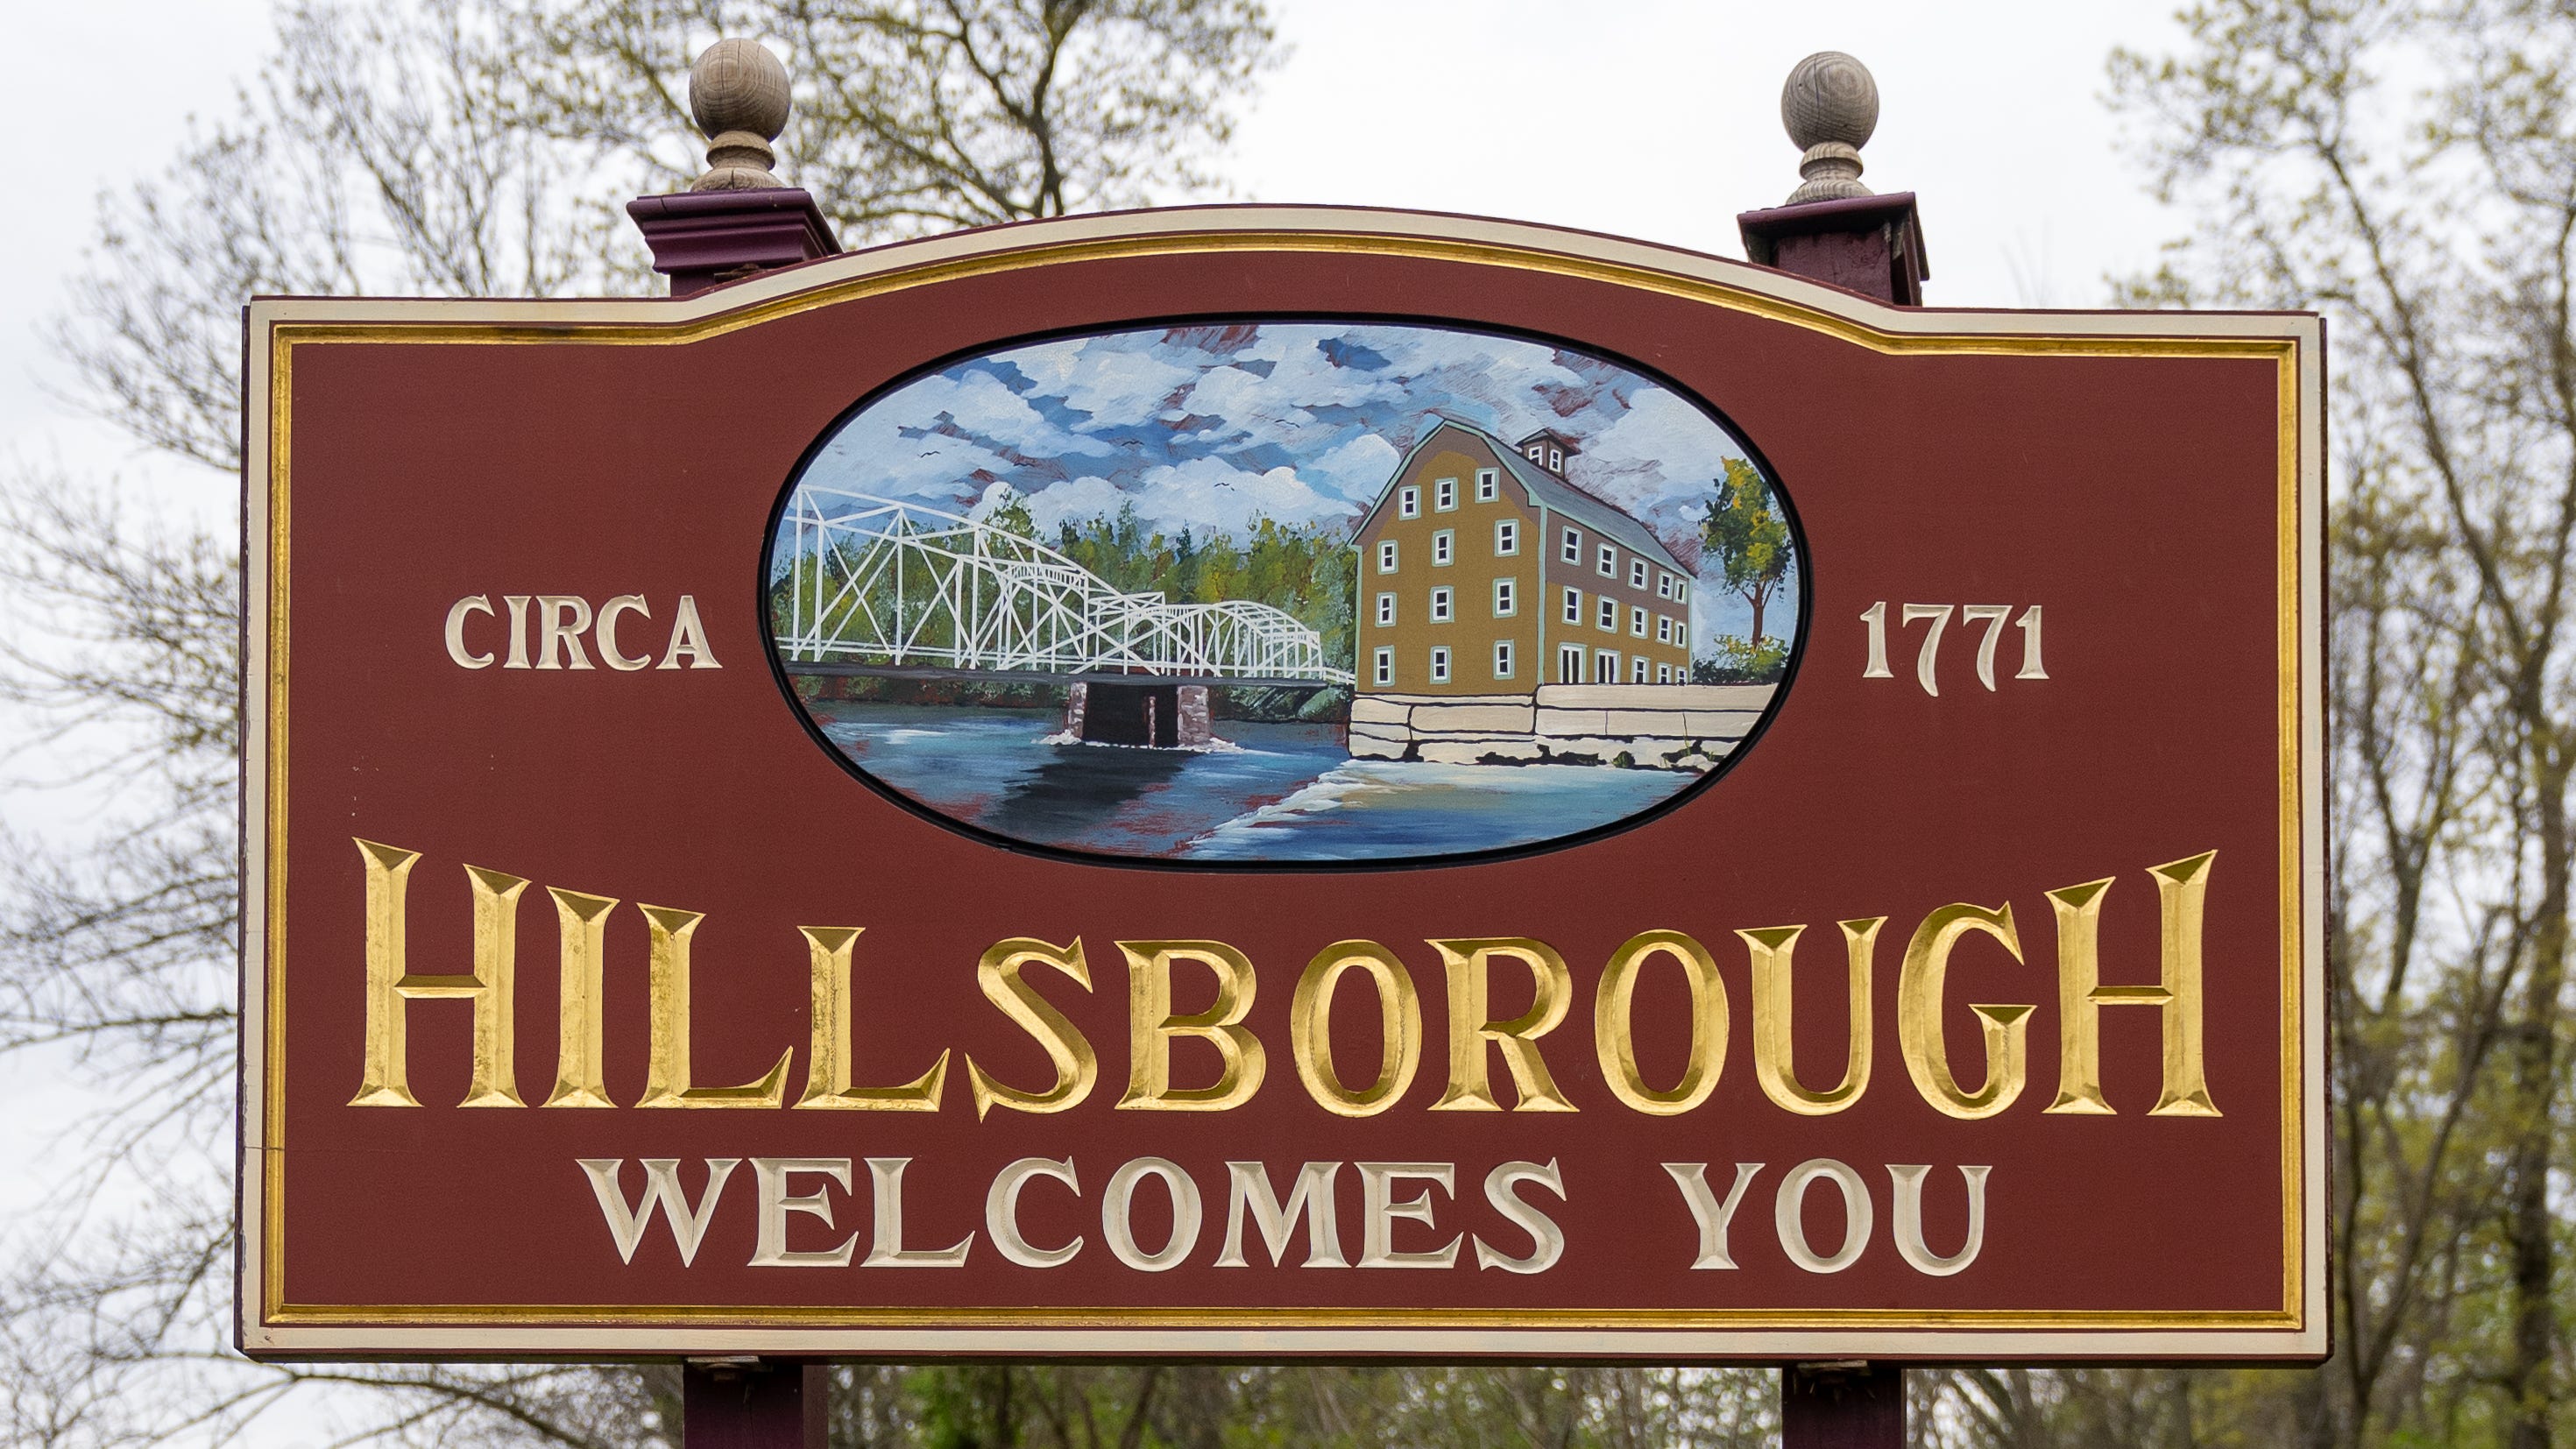 Hillsborough NJ warehouse plans exceed 1 million square feet